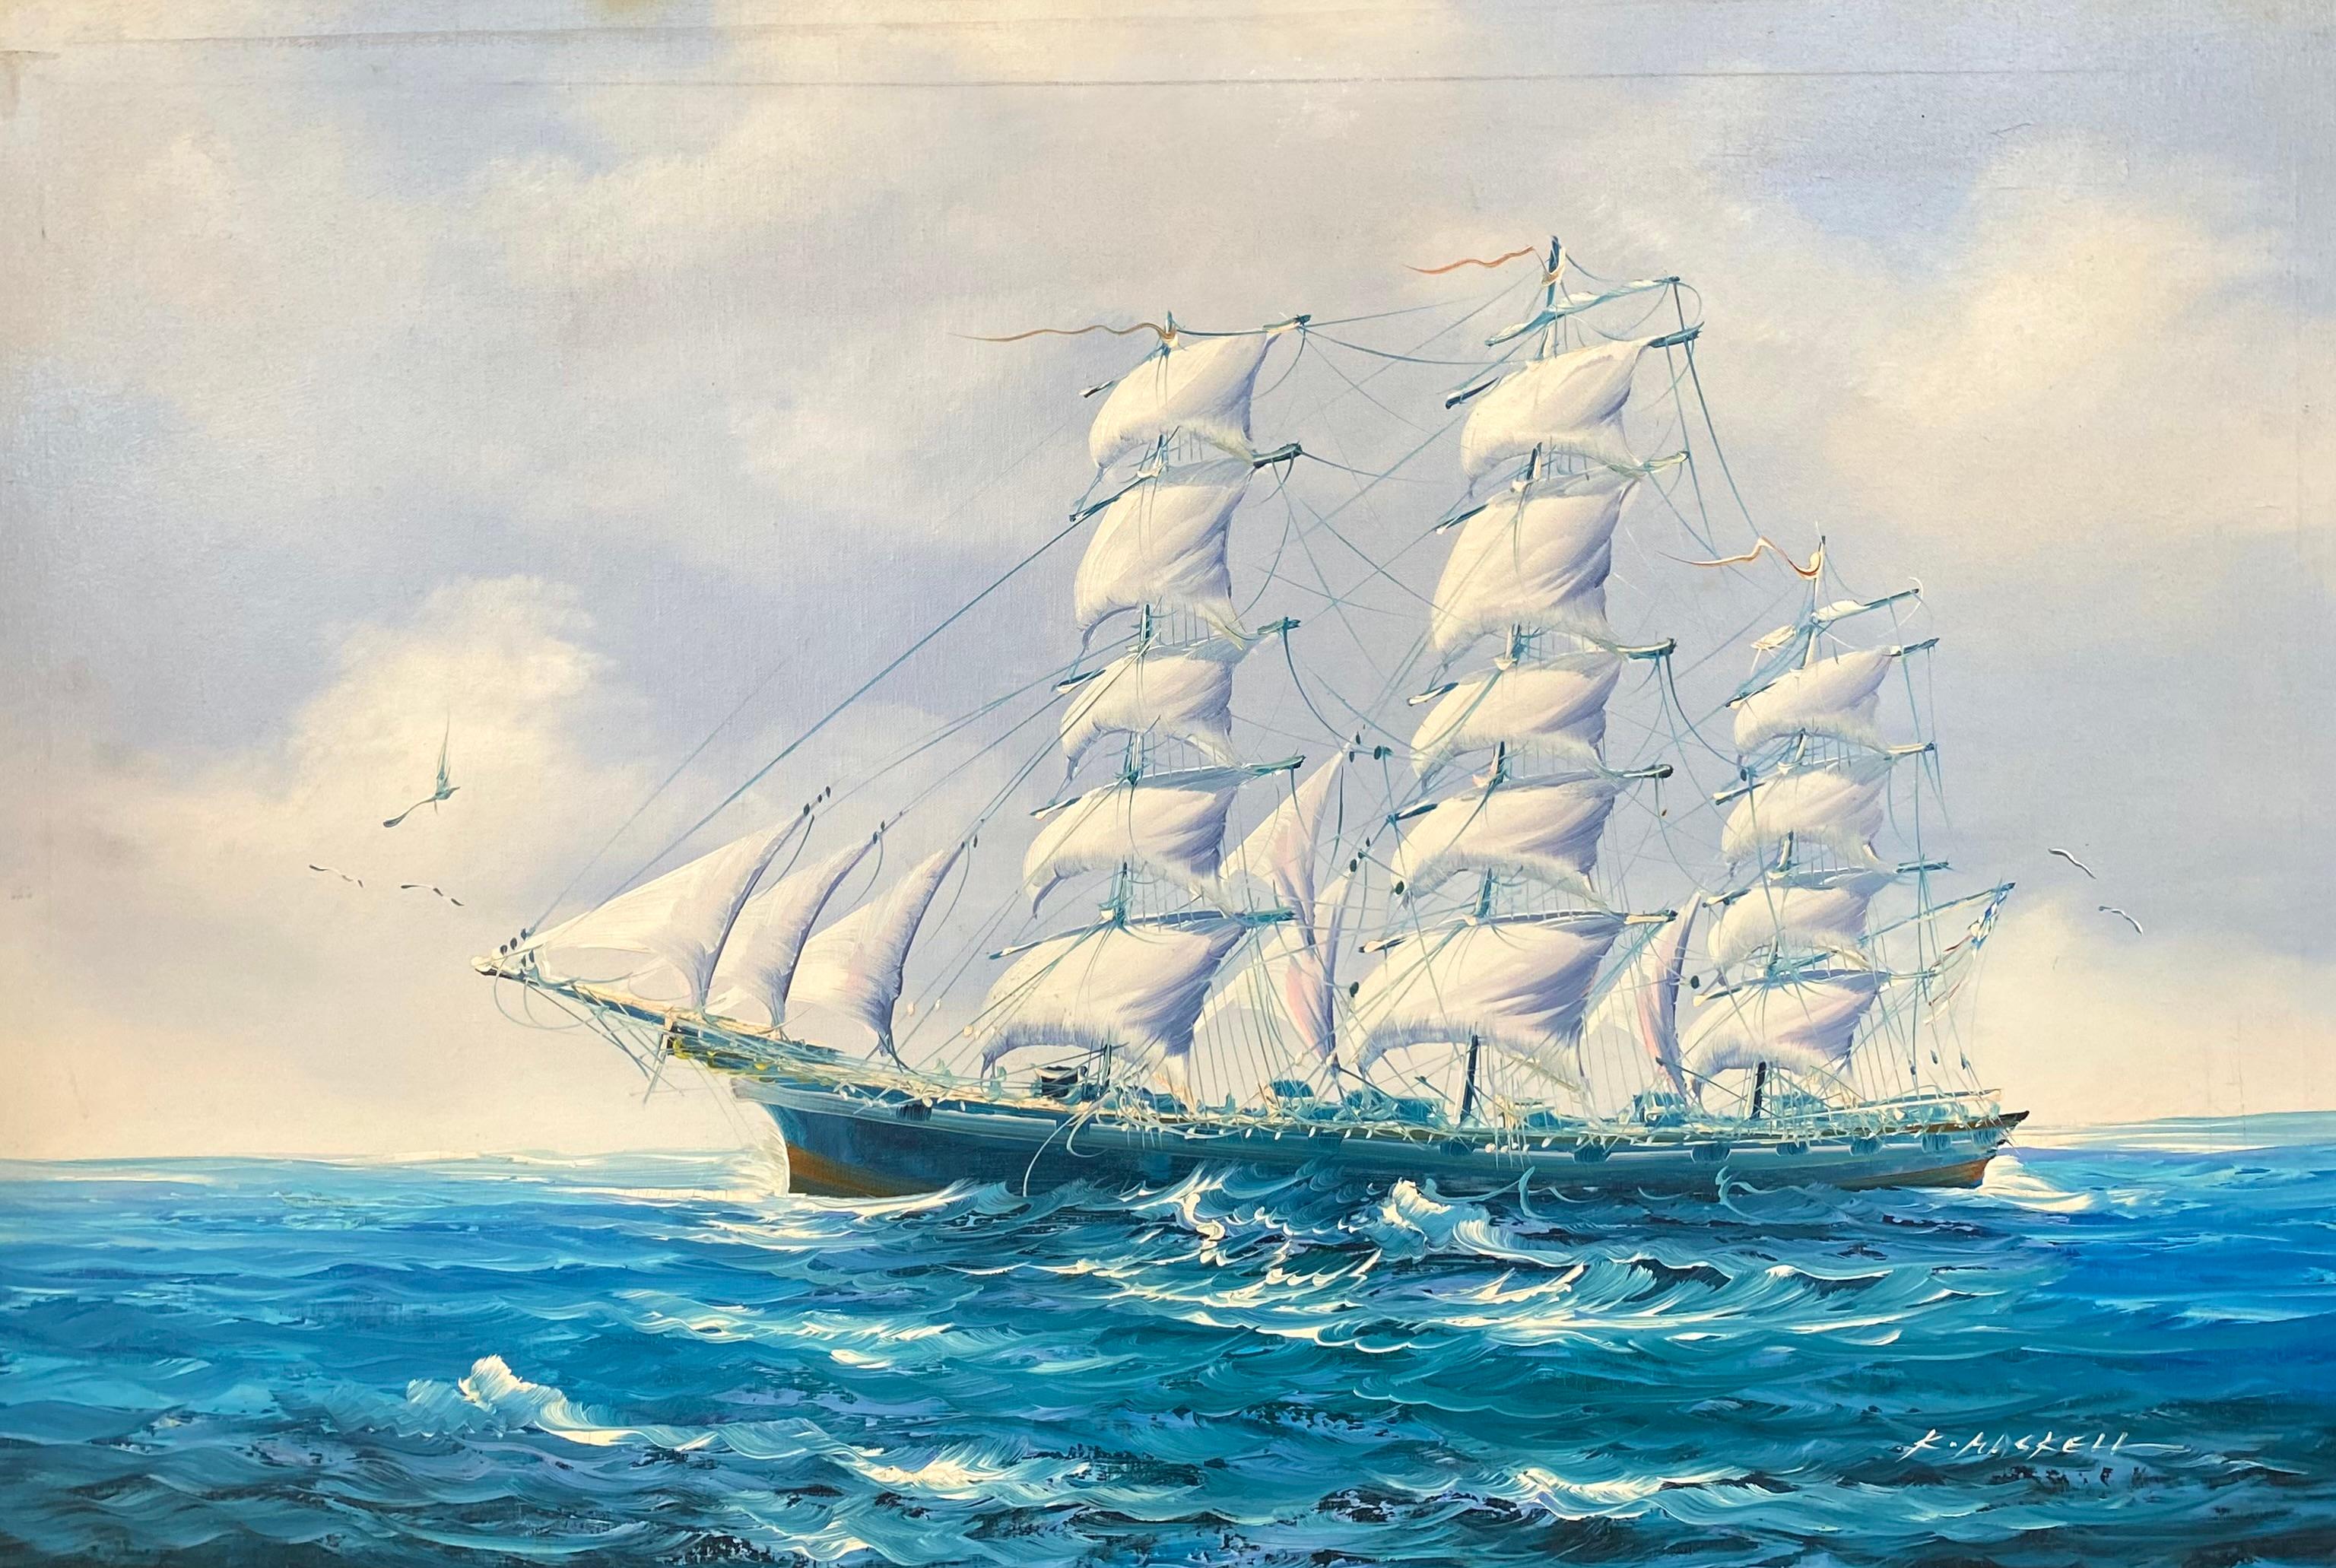 K. Maskell Landscape Painting - “Clipper under Full Sail”